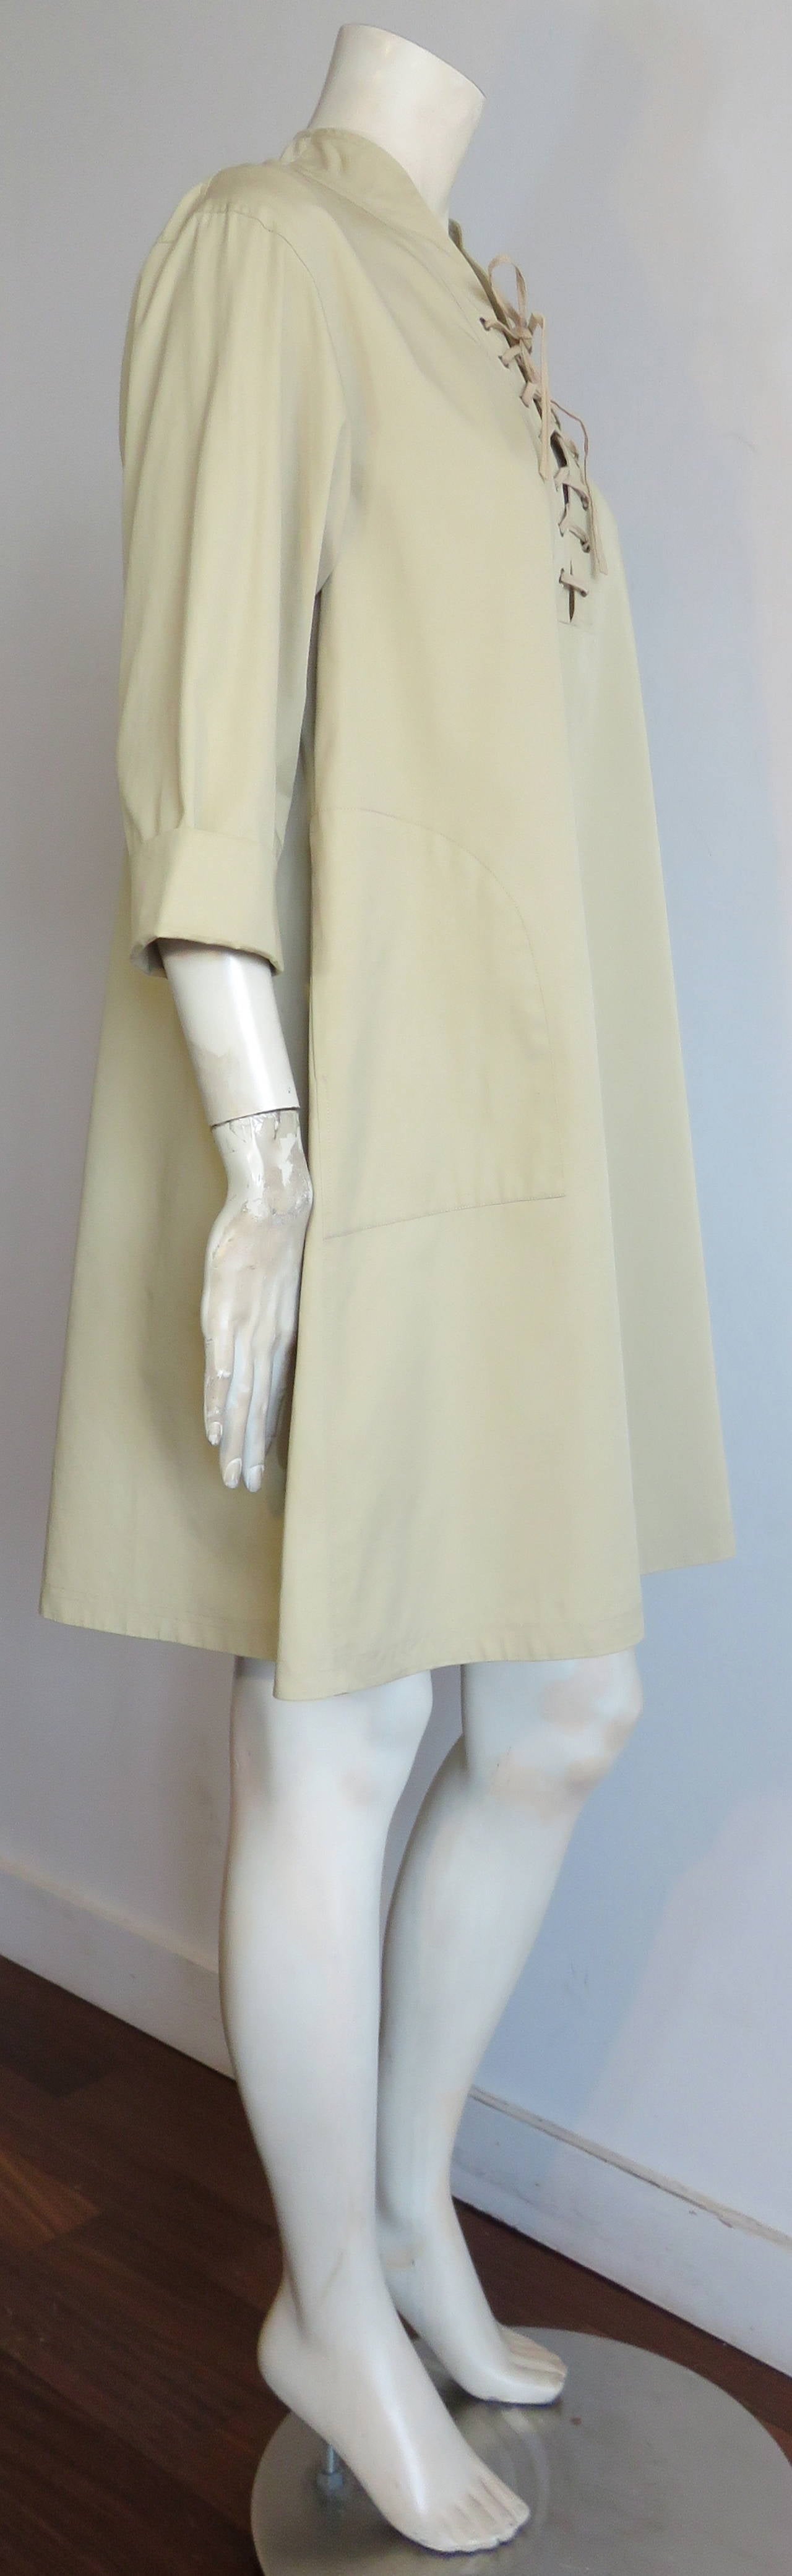 Women's 1990's YVES SAINT LAURENT YSL Safari tunic dress For Sale